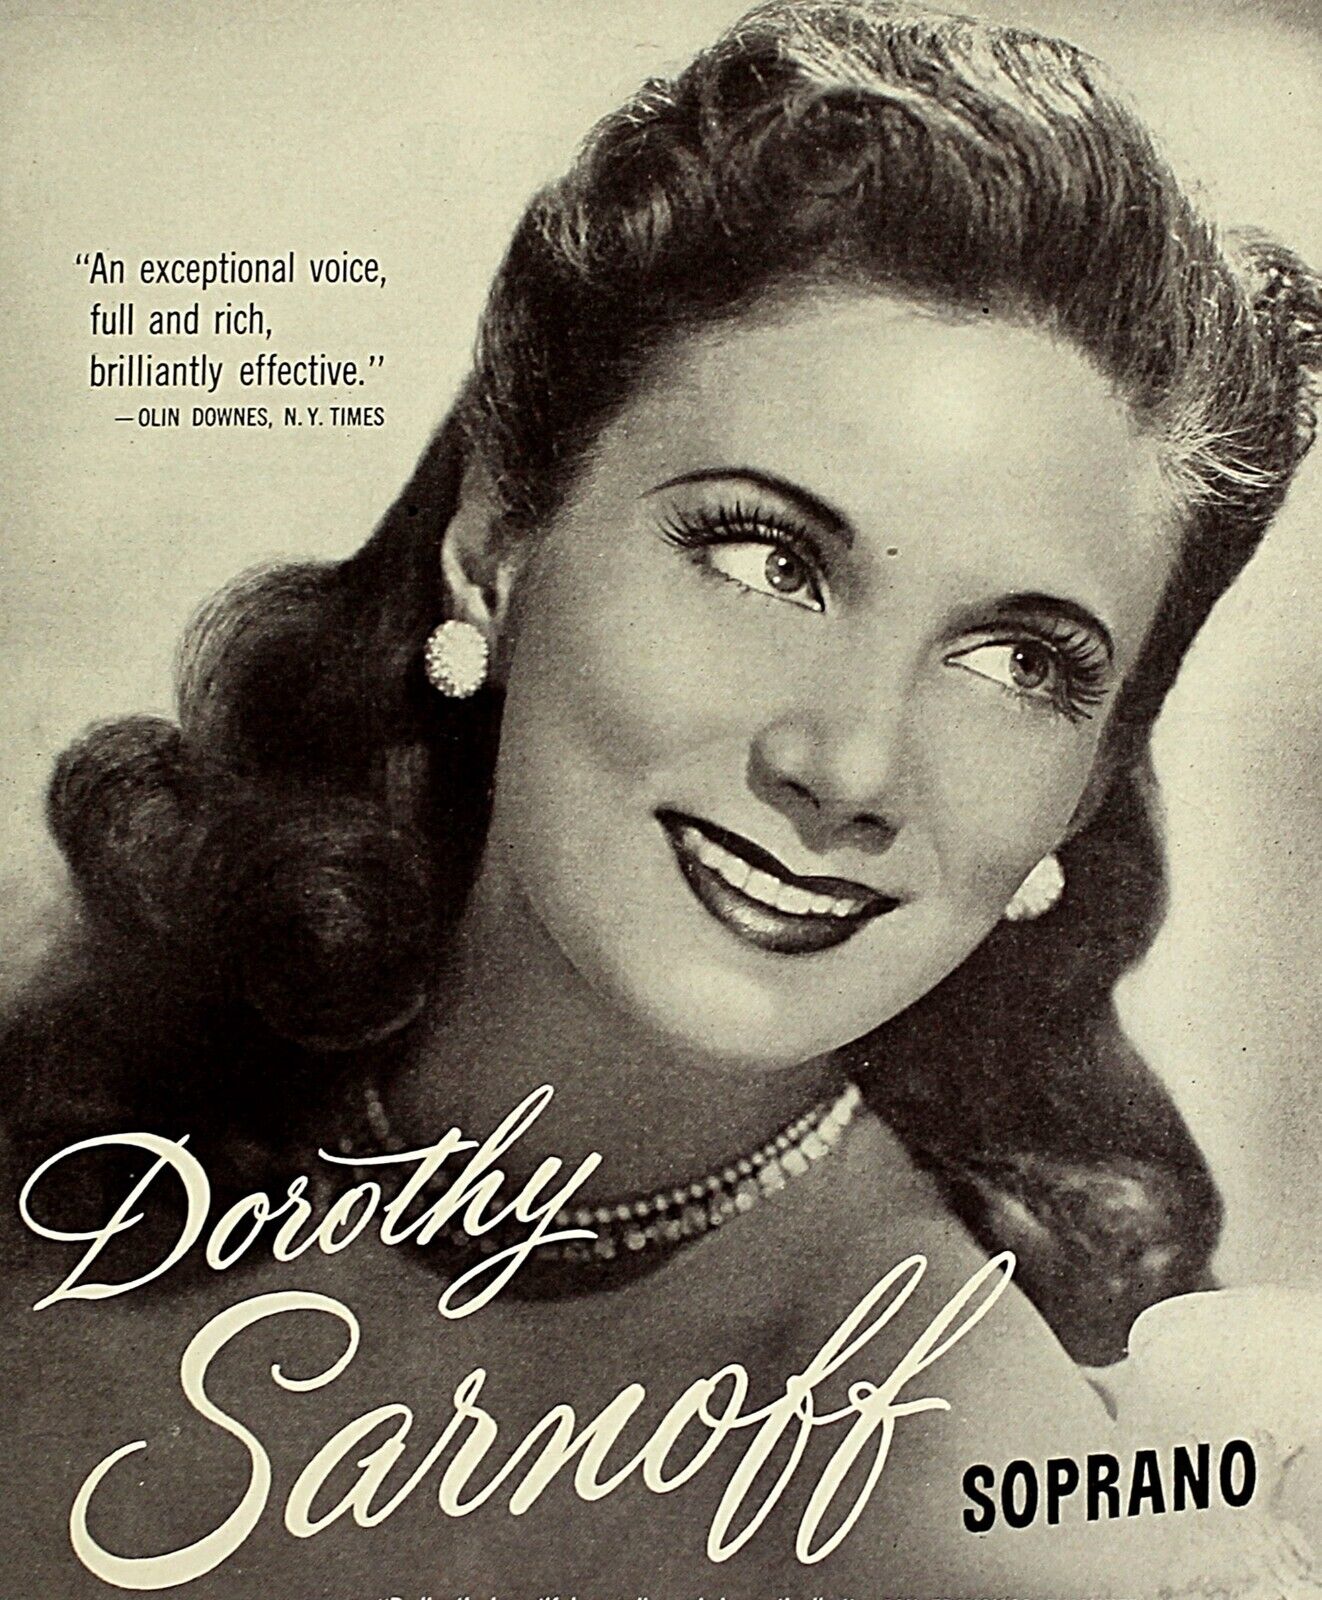 Vintage Music Print Ad DOROTHY SARNOFF Soprano 1949 Booking Ads 13 x 9 3/4